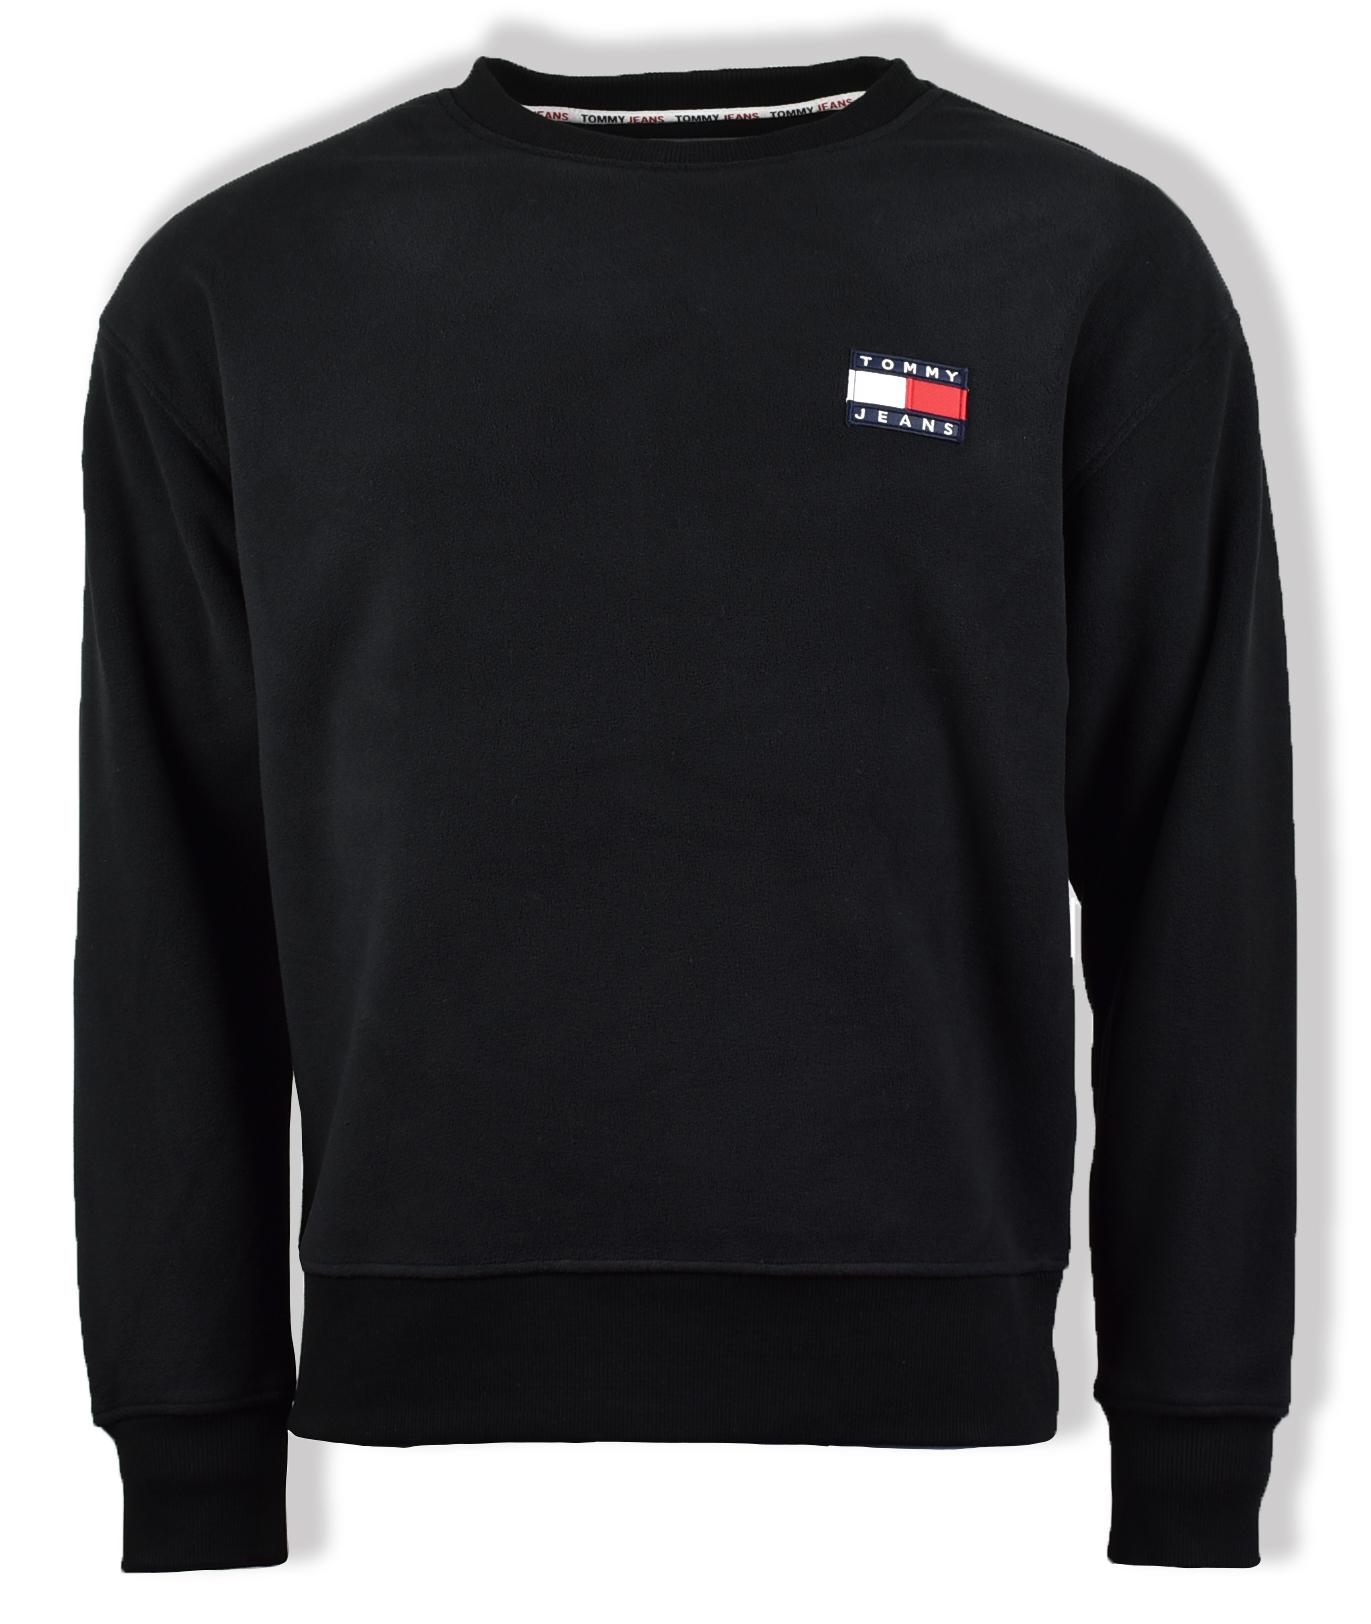 Tommy Hilfiger Polar Fleece Sweatshirt (black) for Men - Lyst